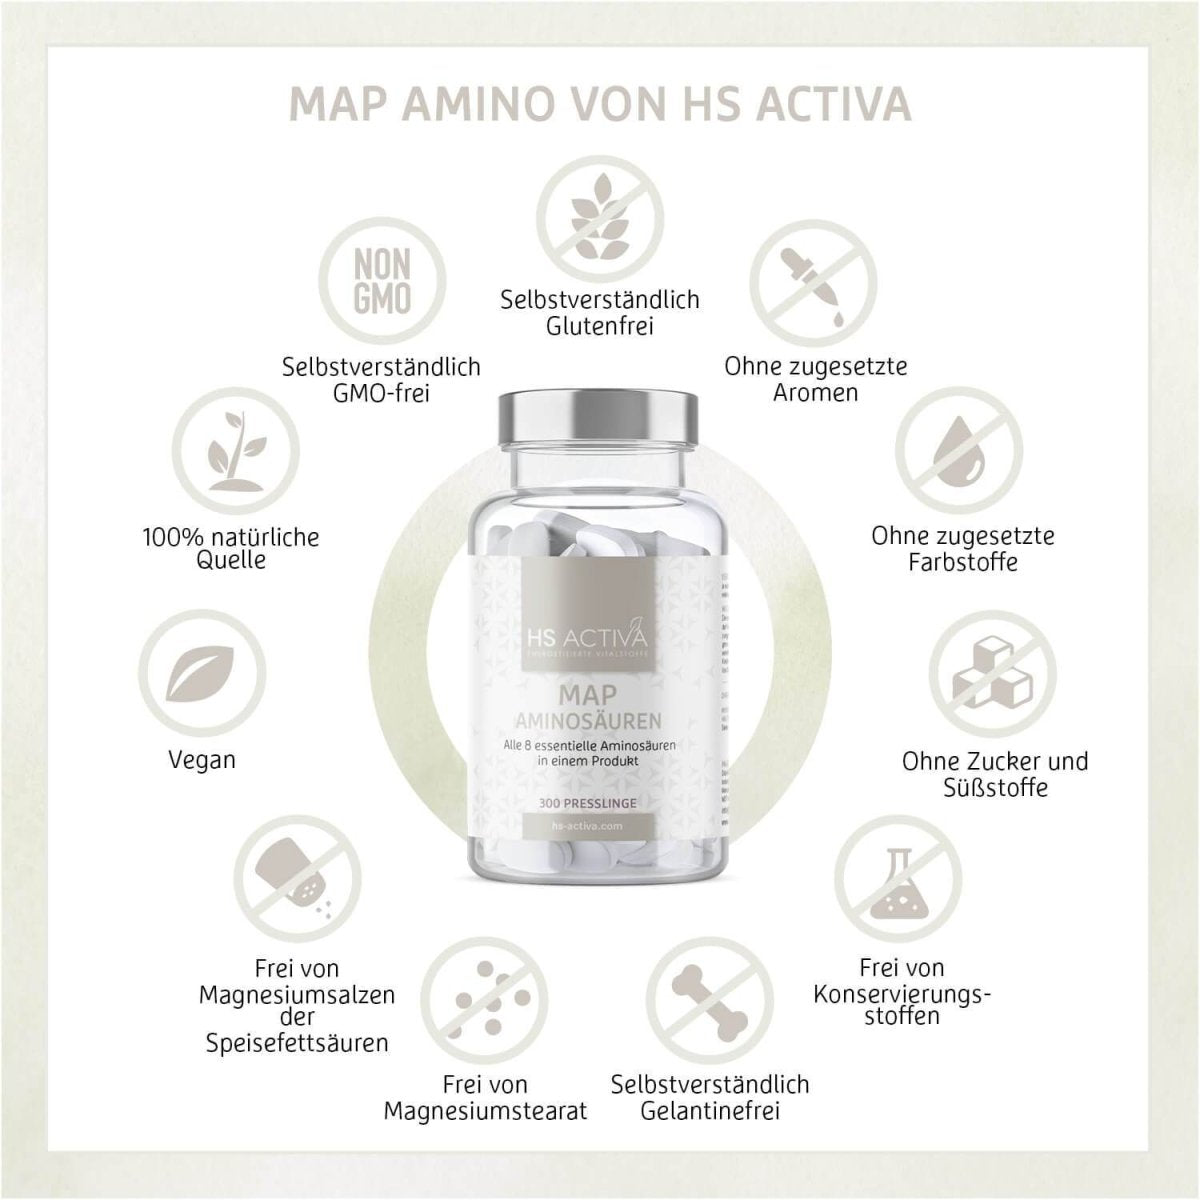 MAP-Amino | Master Amino Acid Pattern | 8 essentielle Aminosäuren im perfekten Verhältnis - HS Activa